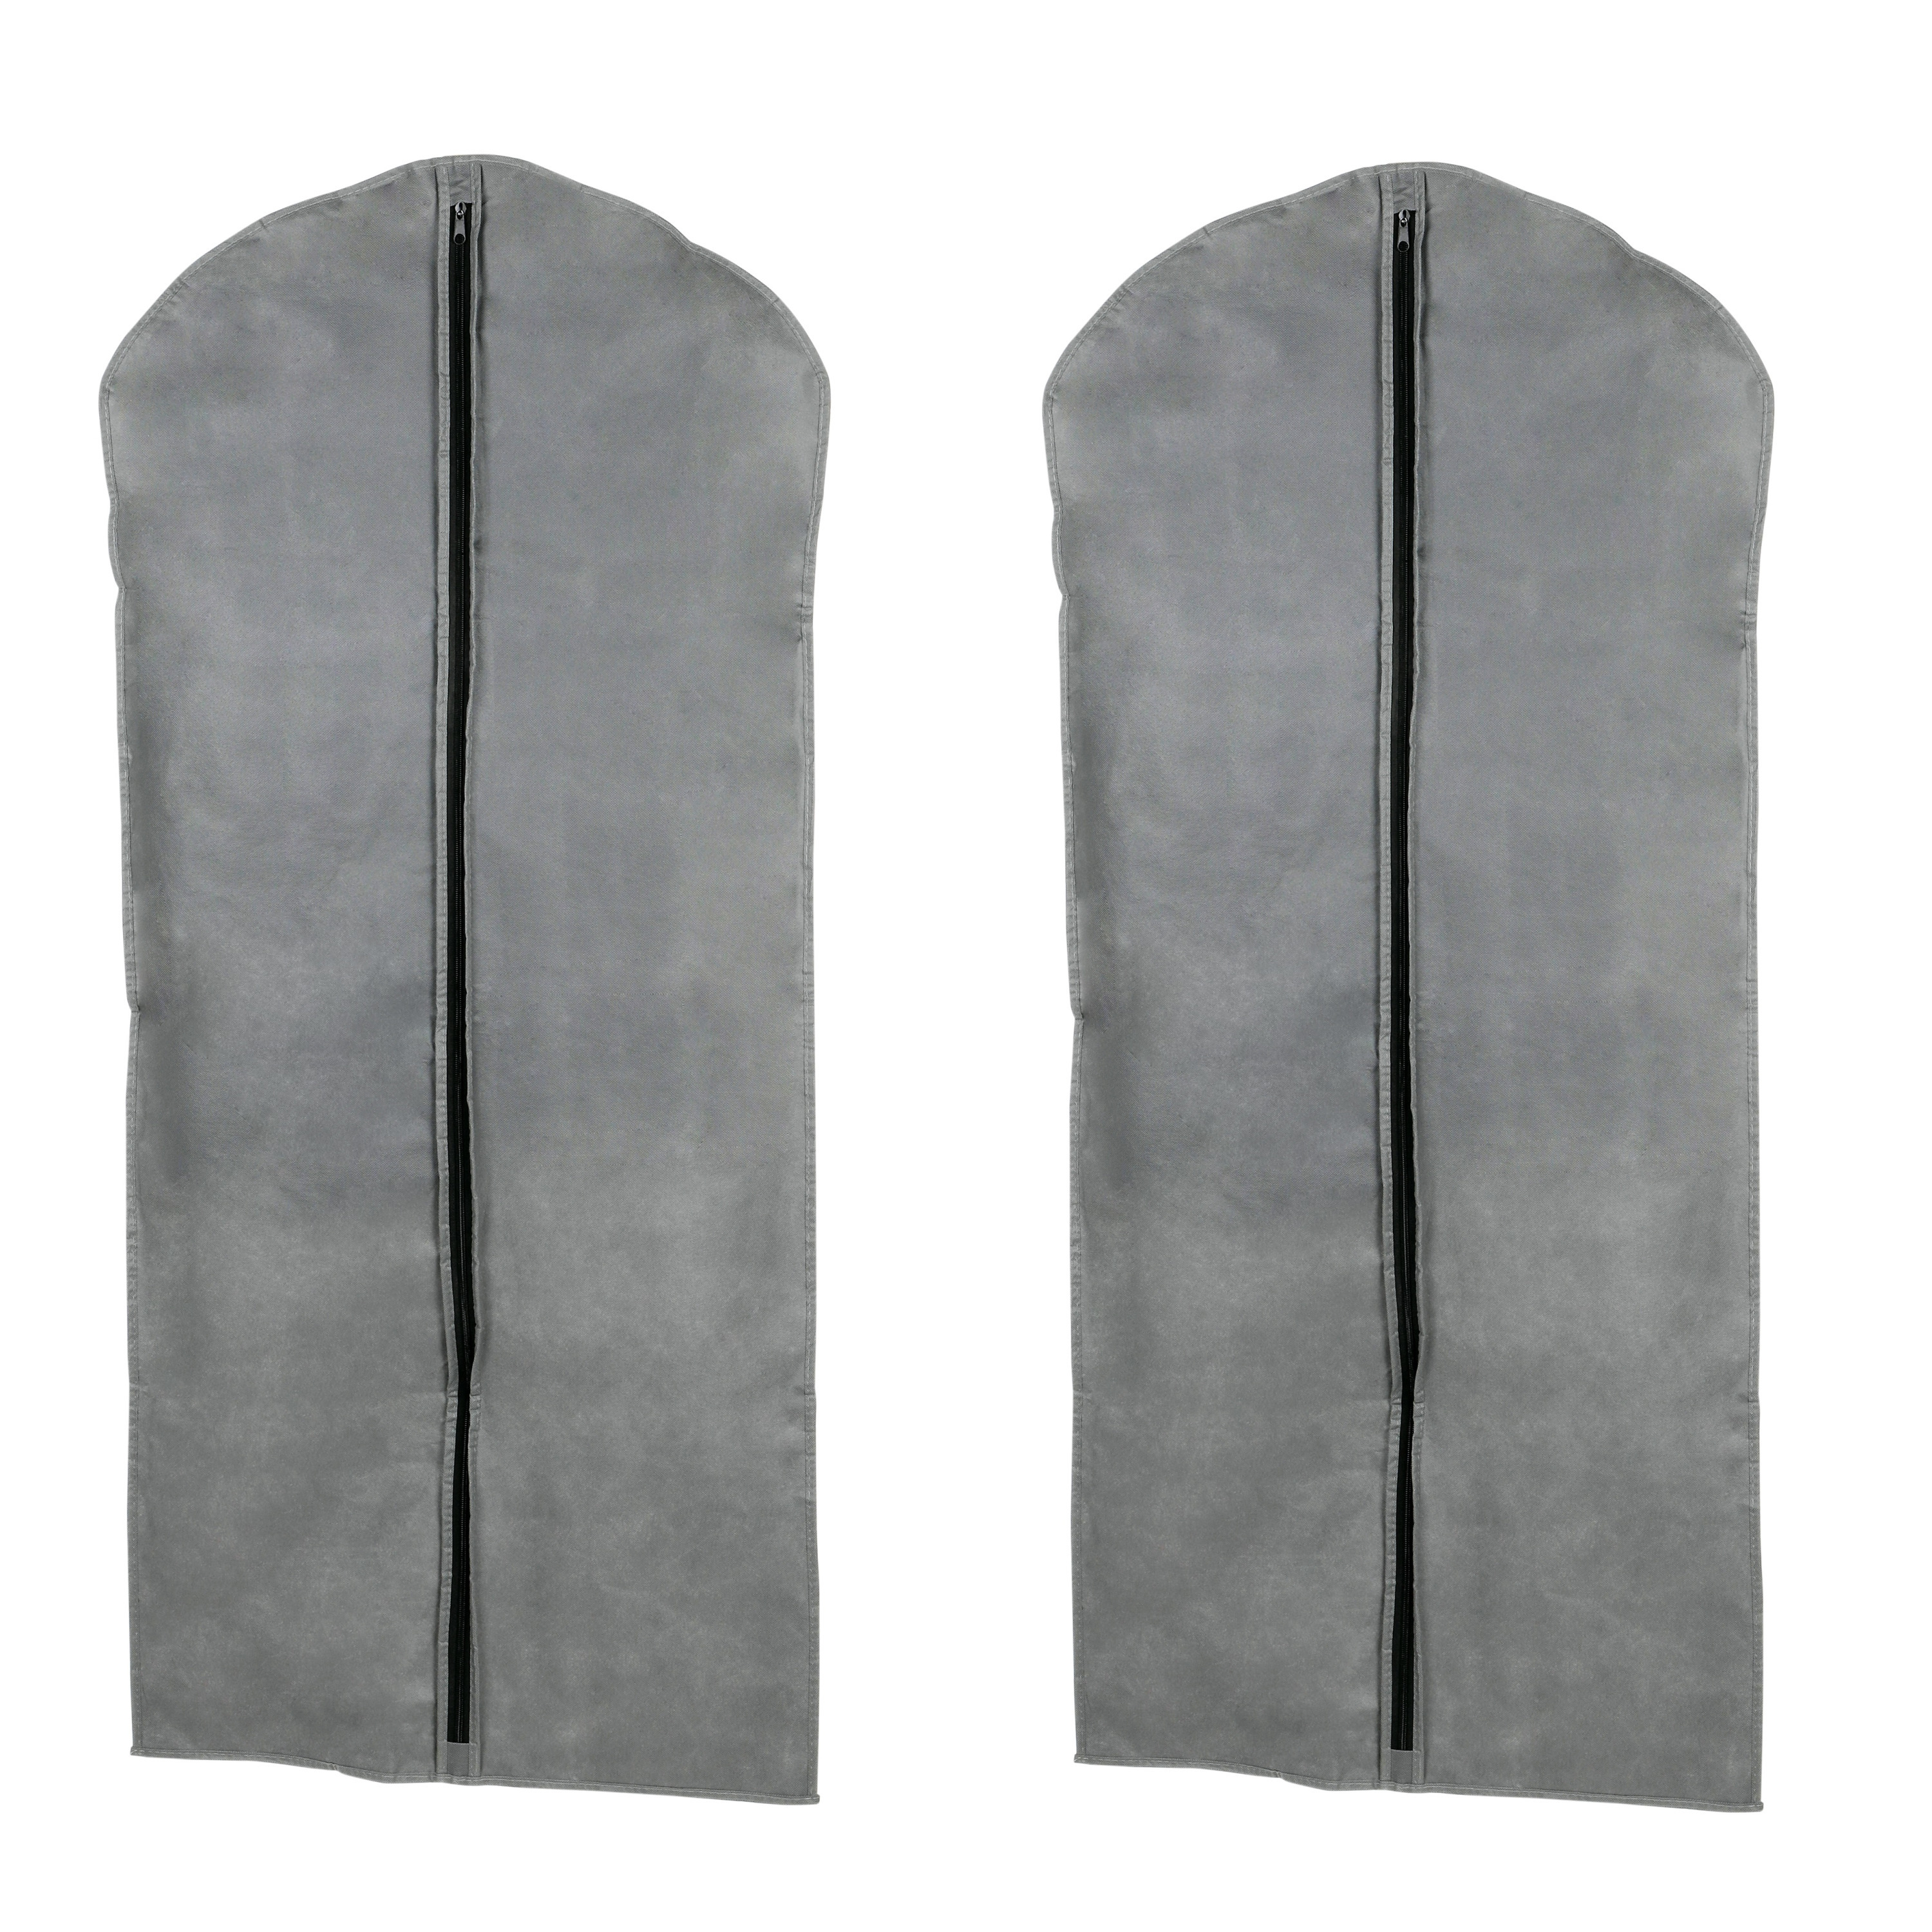 Set van 4x stuks grijze kledinghoes 60 x 137 cm